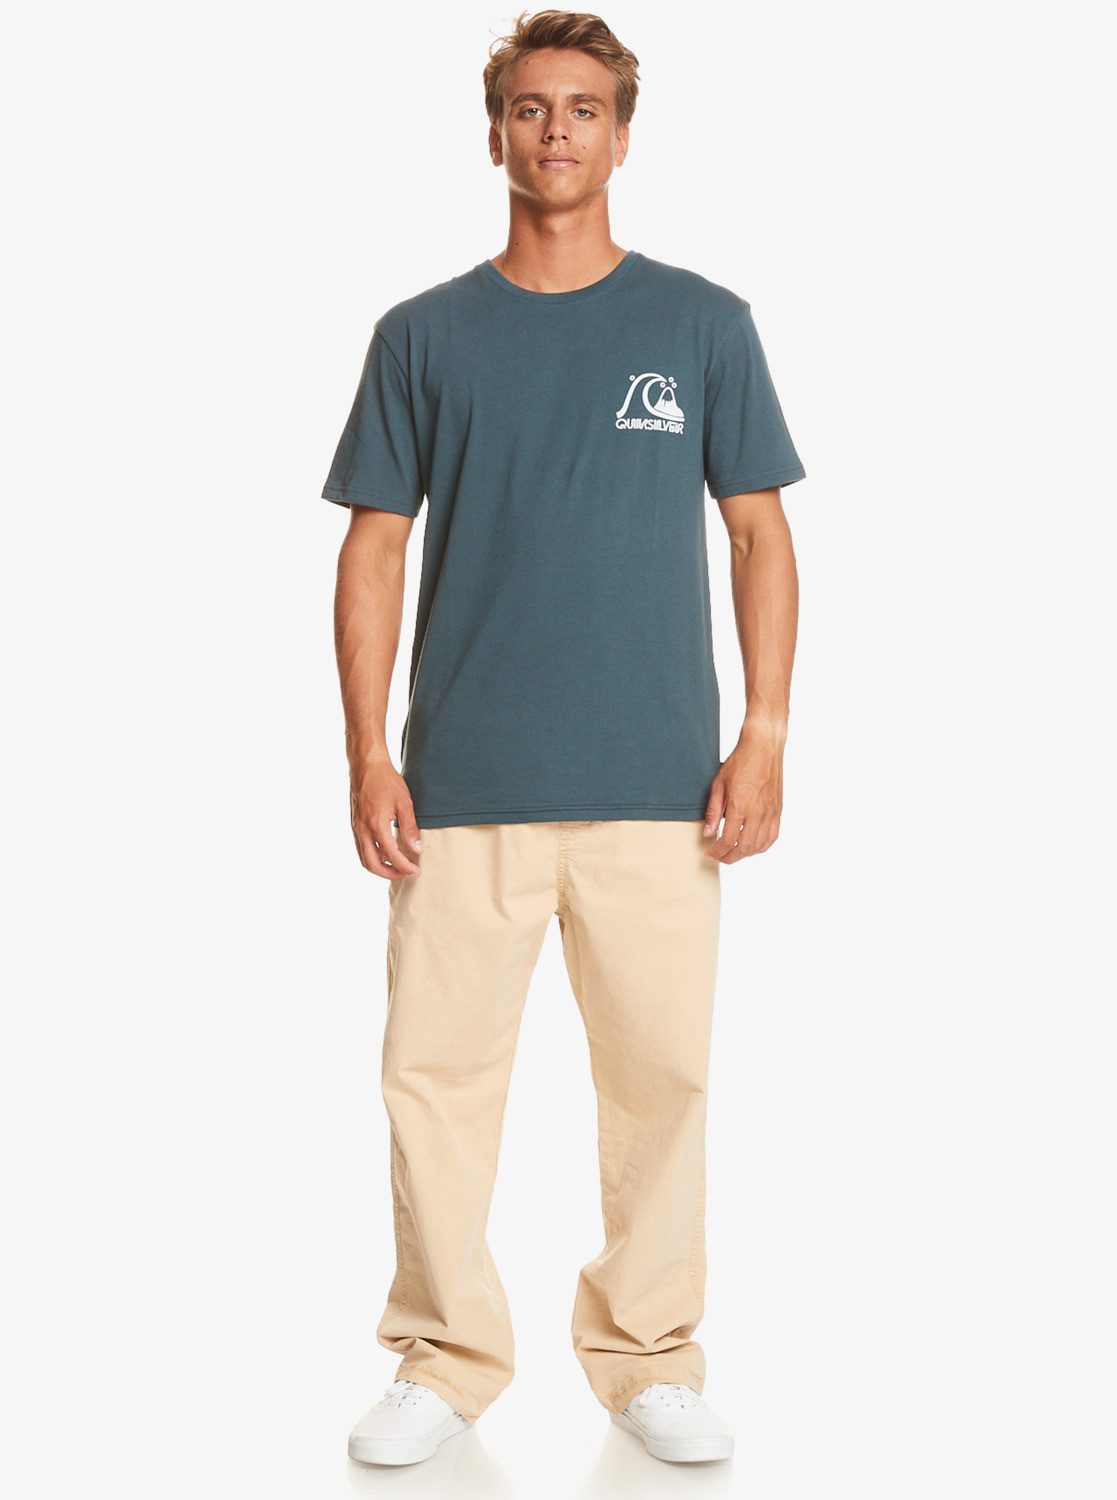 Original Navy Quiksilver The Midnight T-Shirt